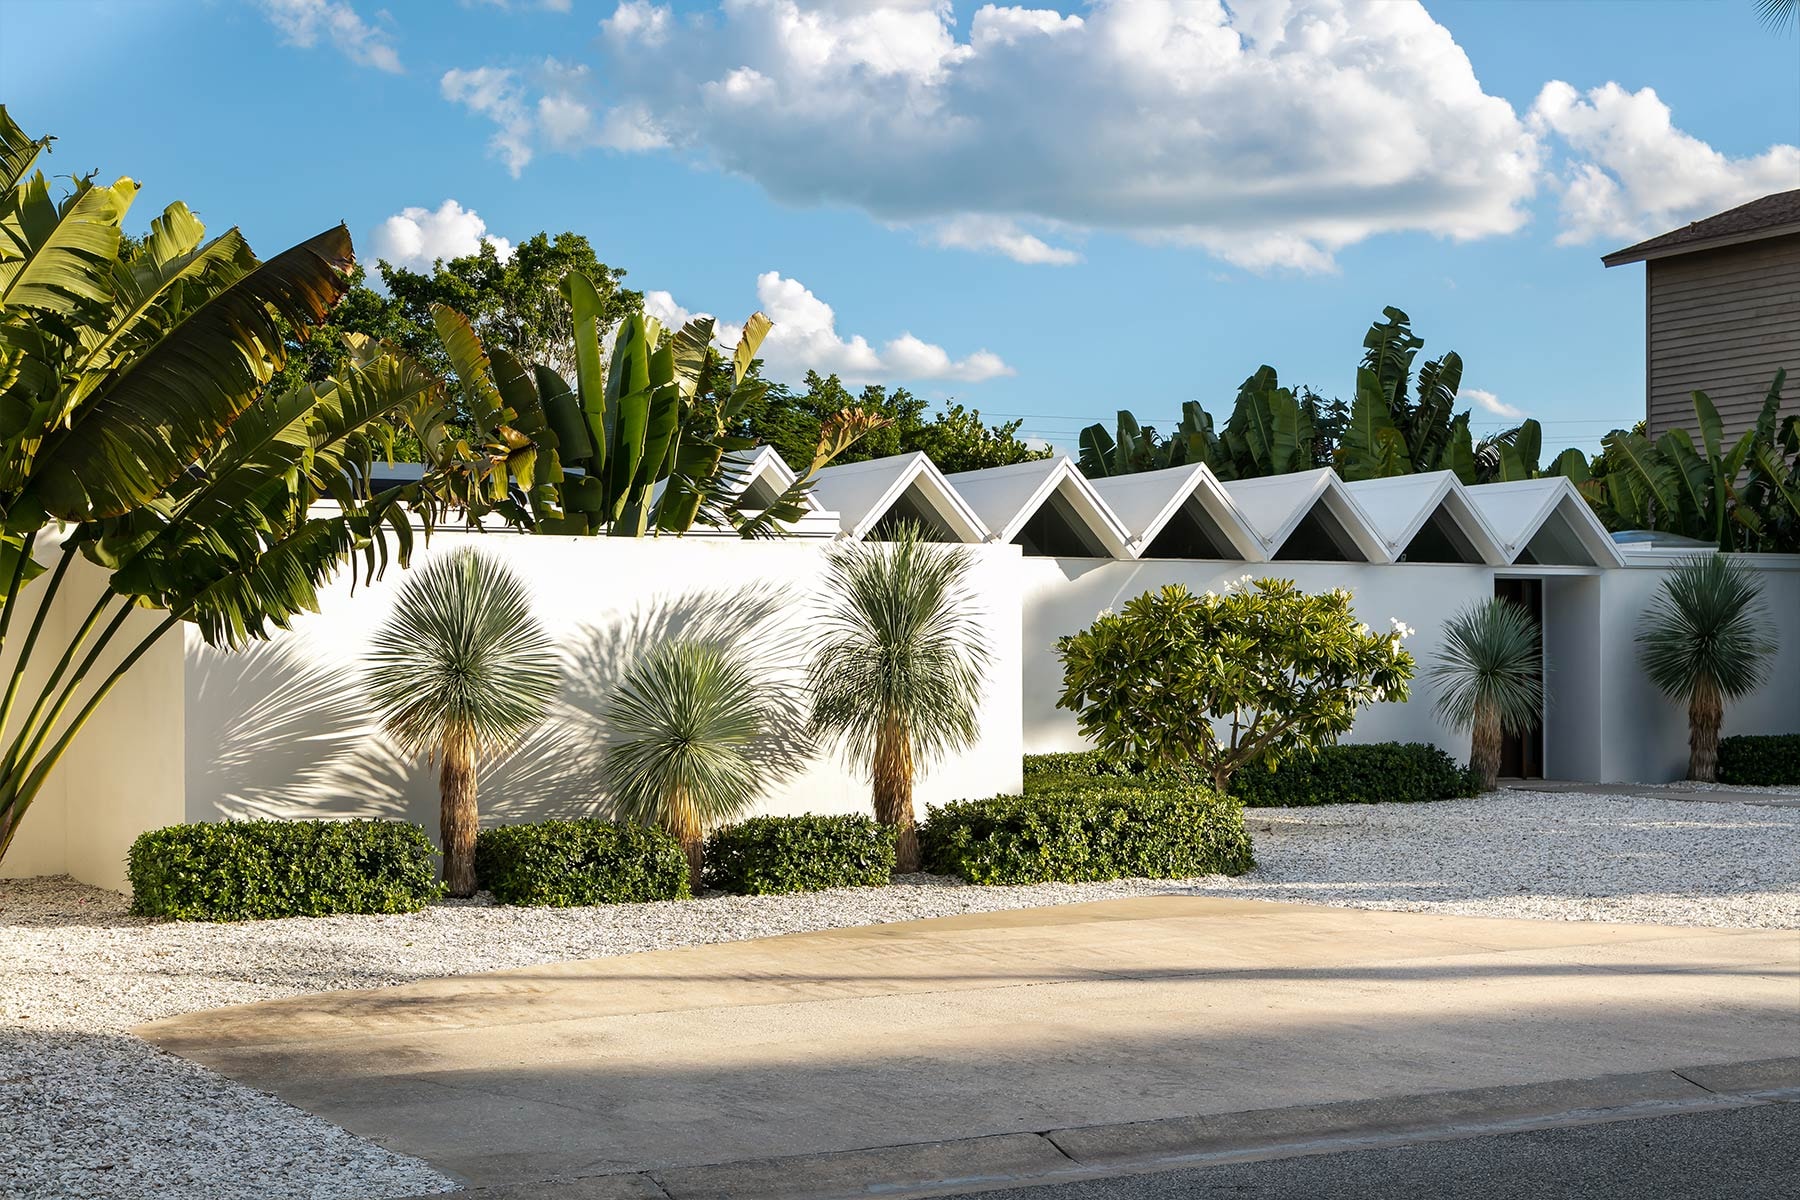 Zig Zag house Ralph Twitchell Sarasota, Florida $3M USD Sotheby’s Realty Listing Florida Umbrella House Paul Rudolph homes luxury 